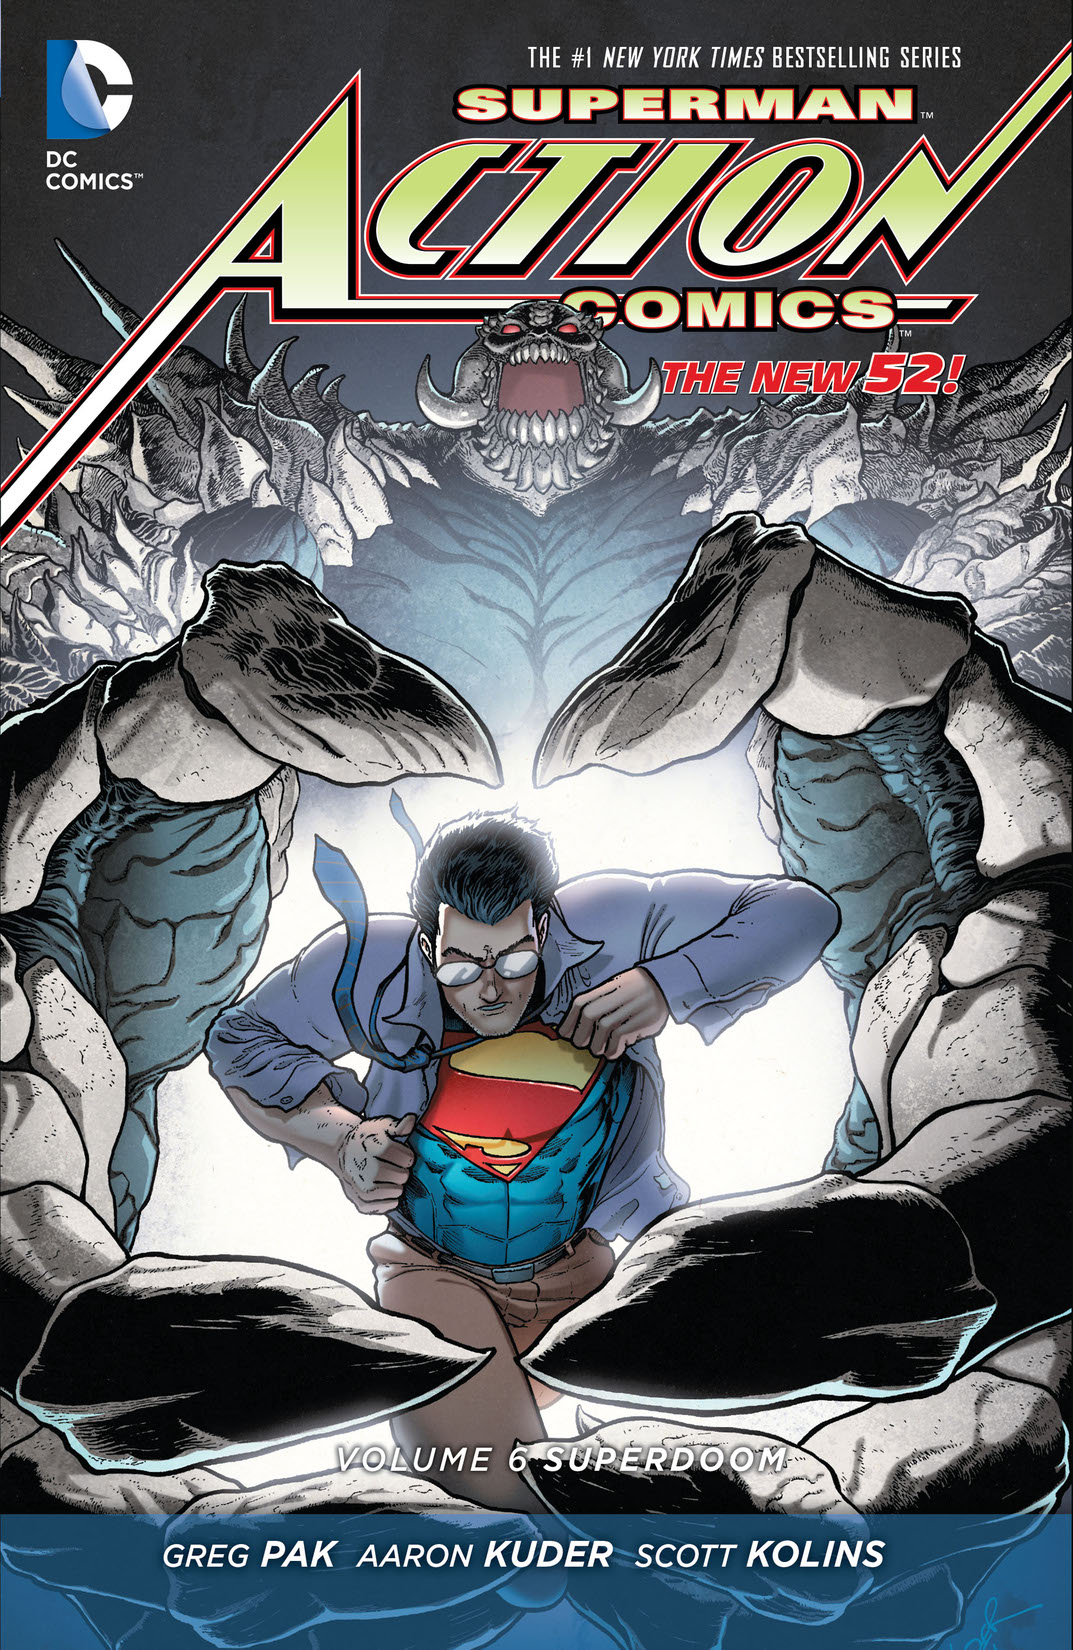 Superman - Action Comics Vol. 6: Superdoom preview images